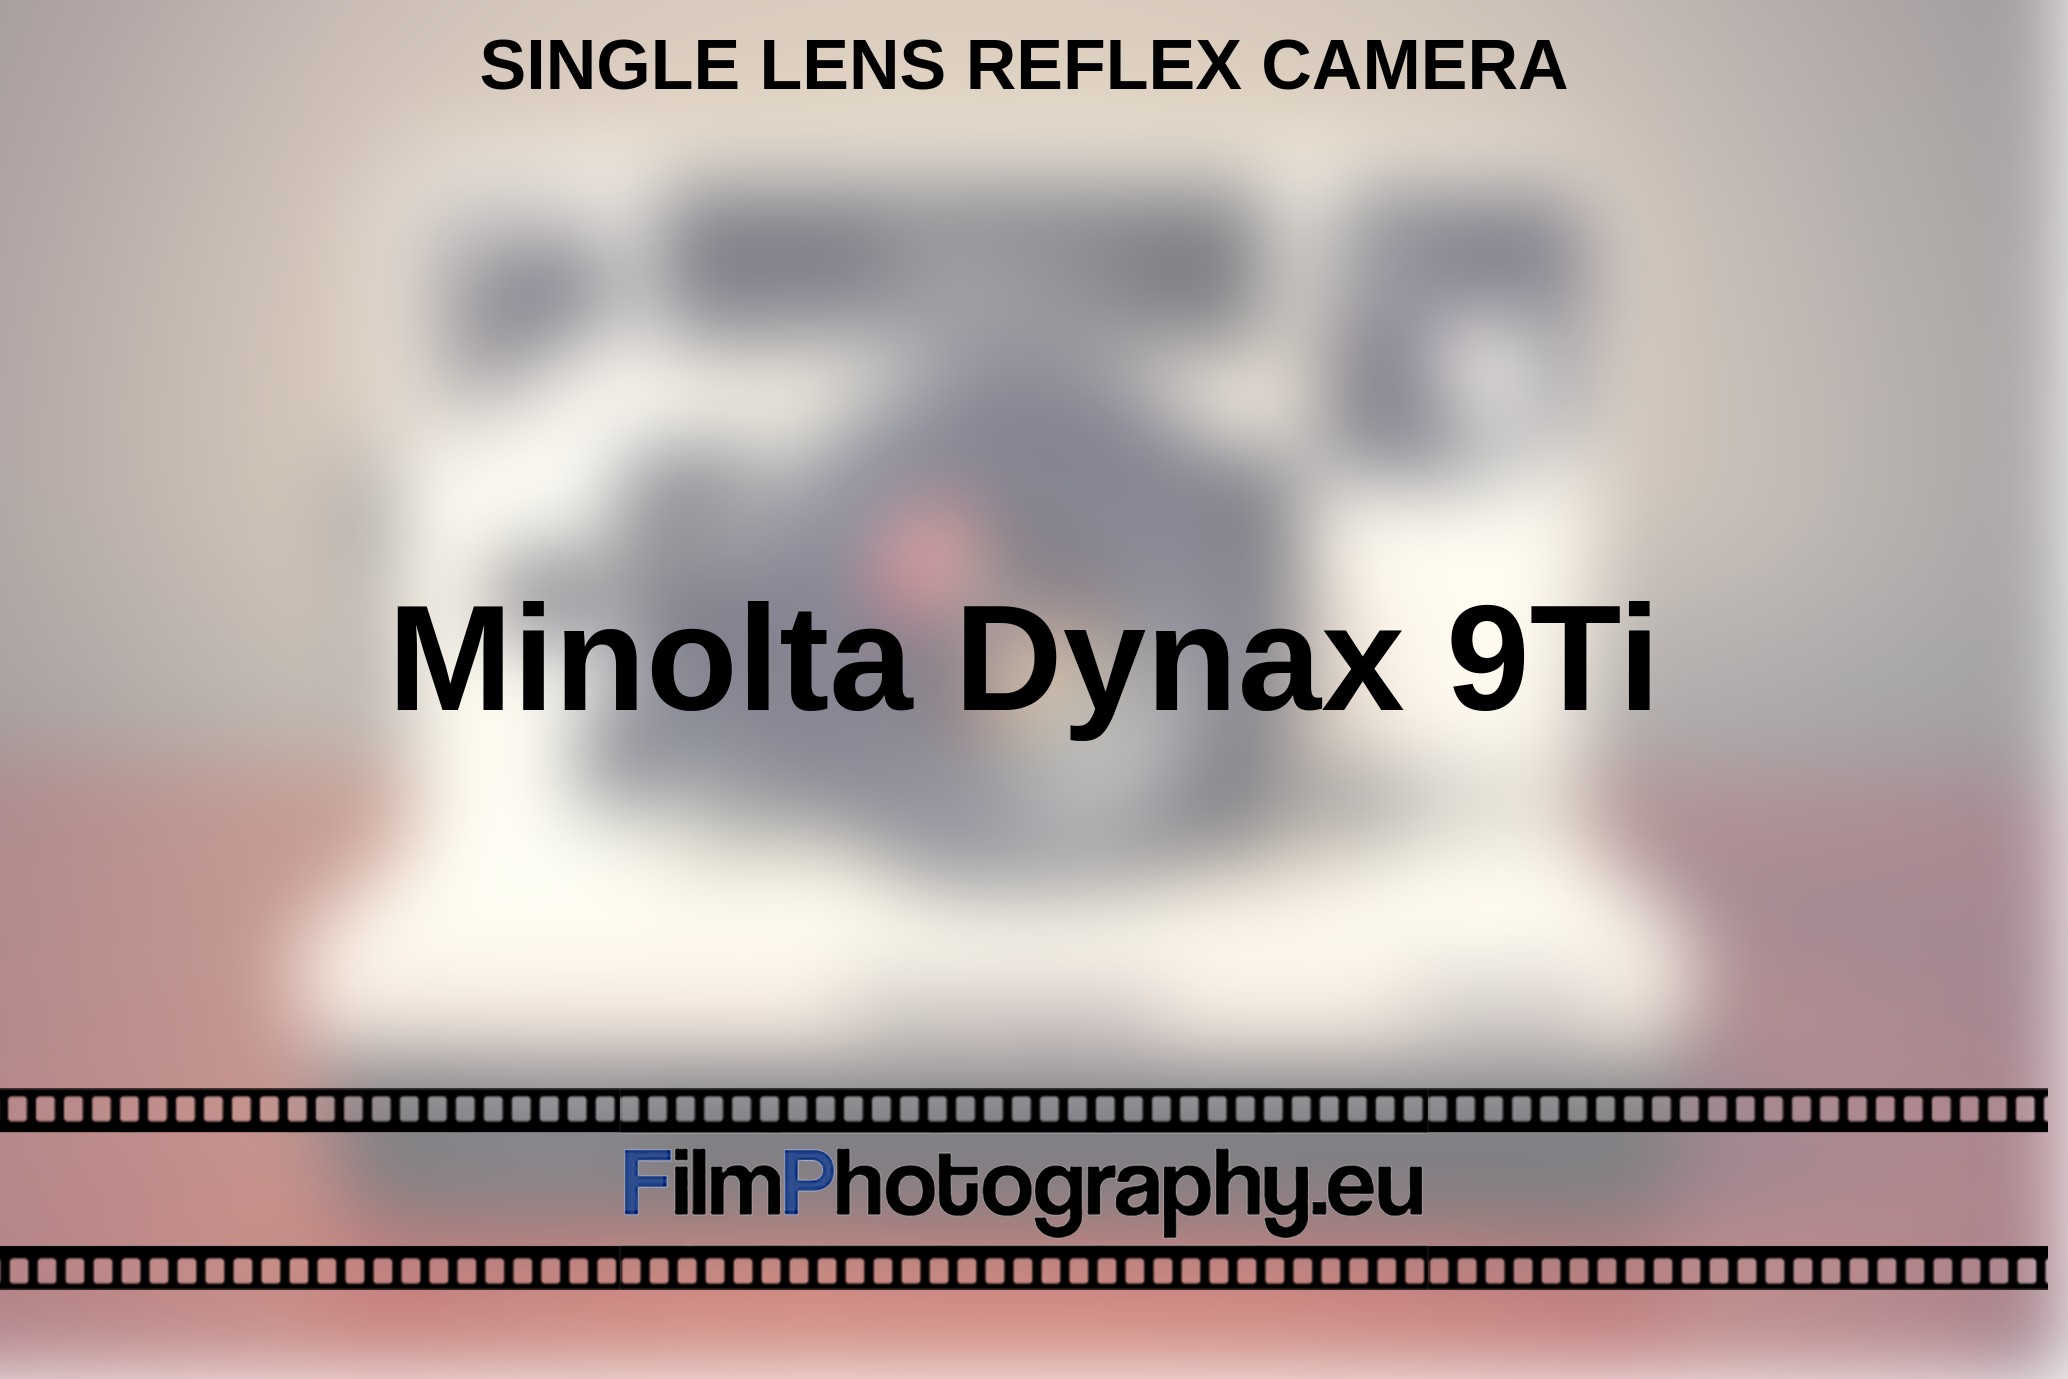 Minolta-Dynax-9Ti-single-lens-reflex-camera-bnv.jpg